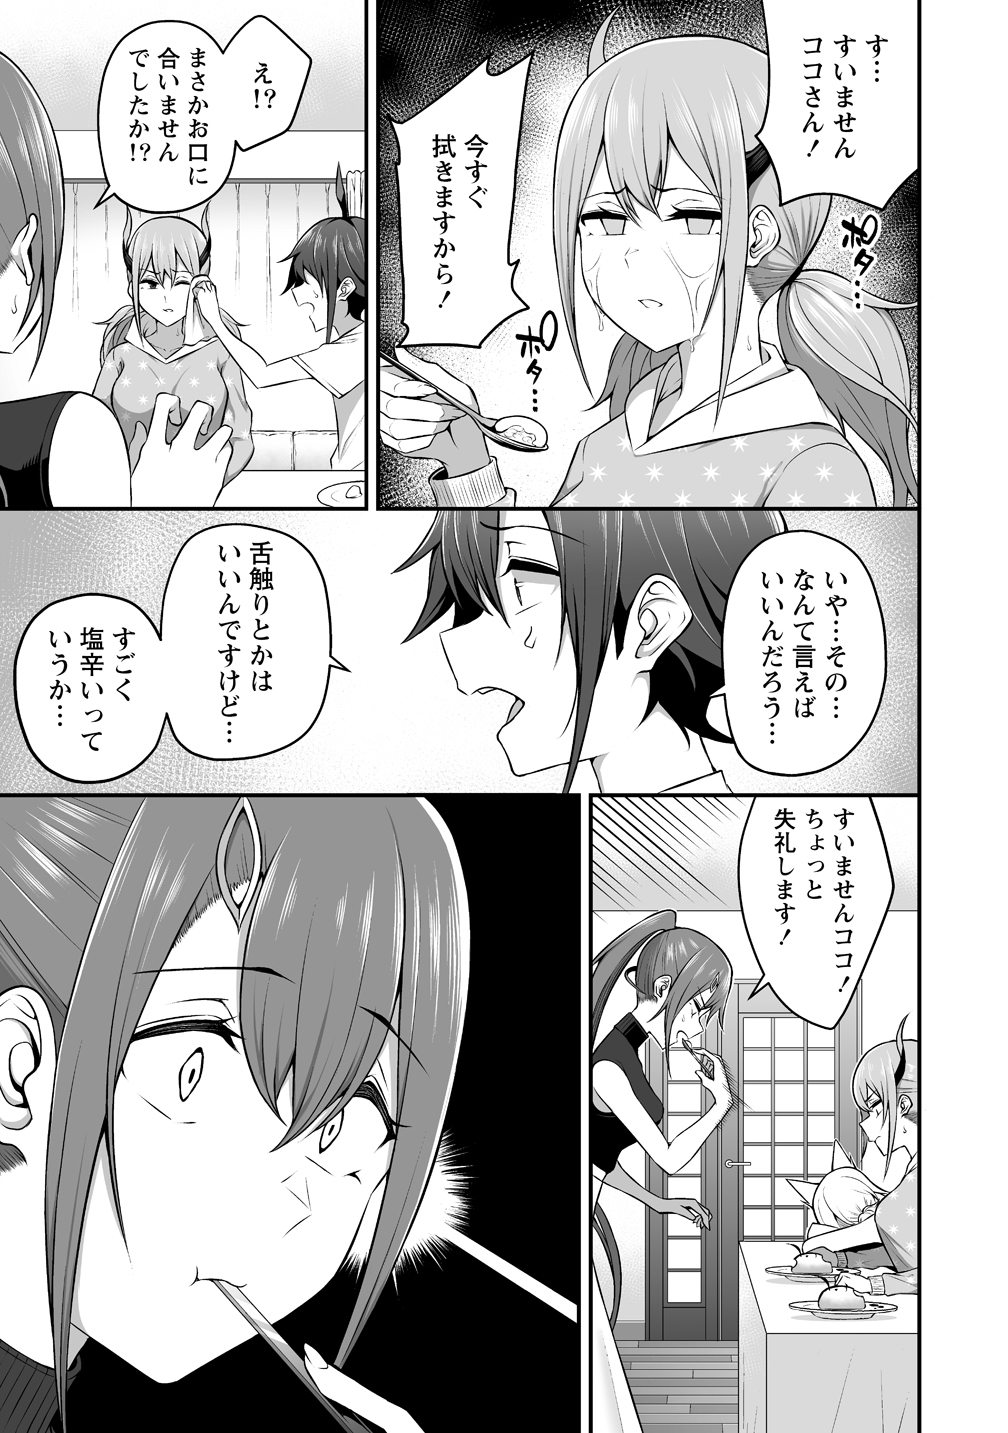 Douyara Boku no Hanayome wa Onna Kishidan na you de - Chapter 5.1 - Page 3